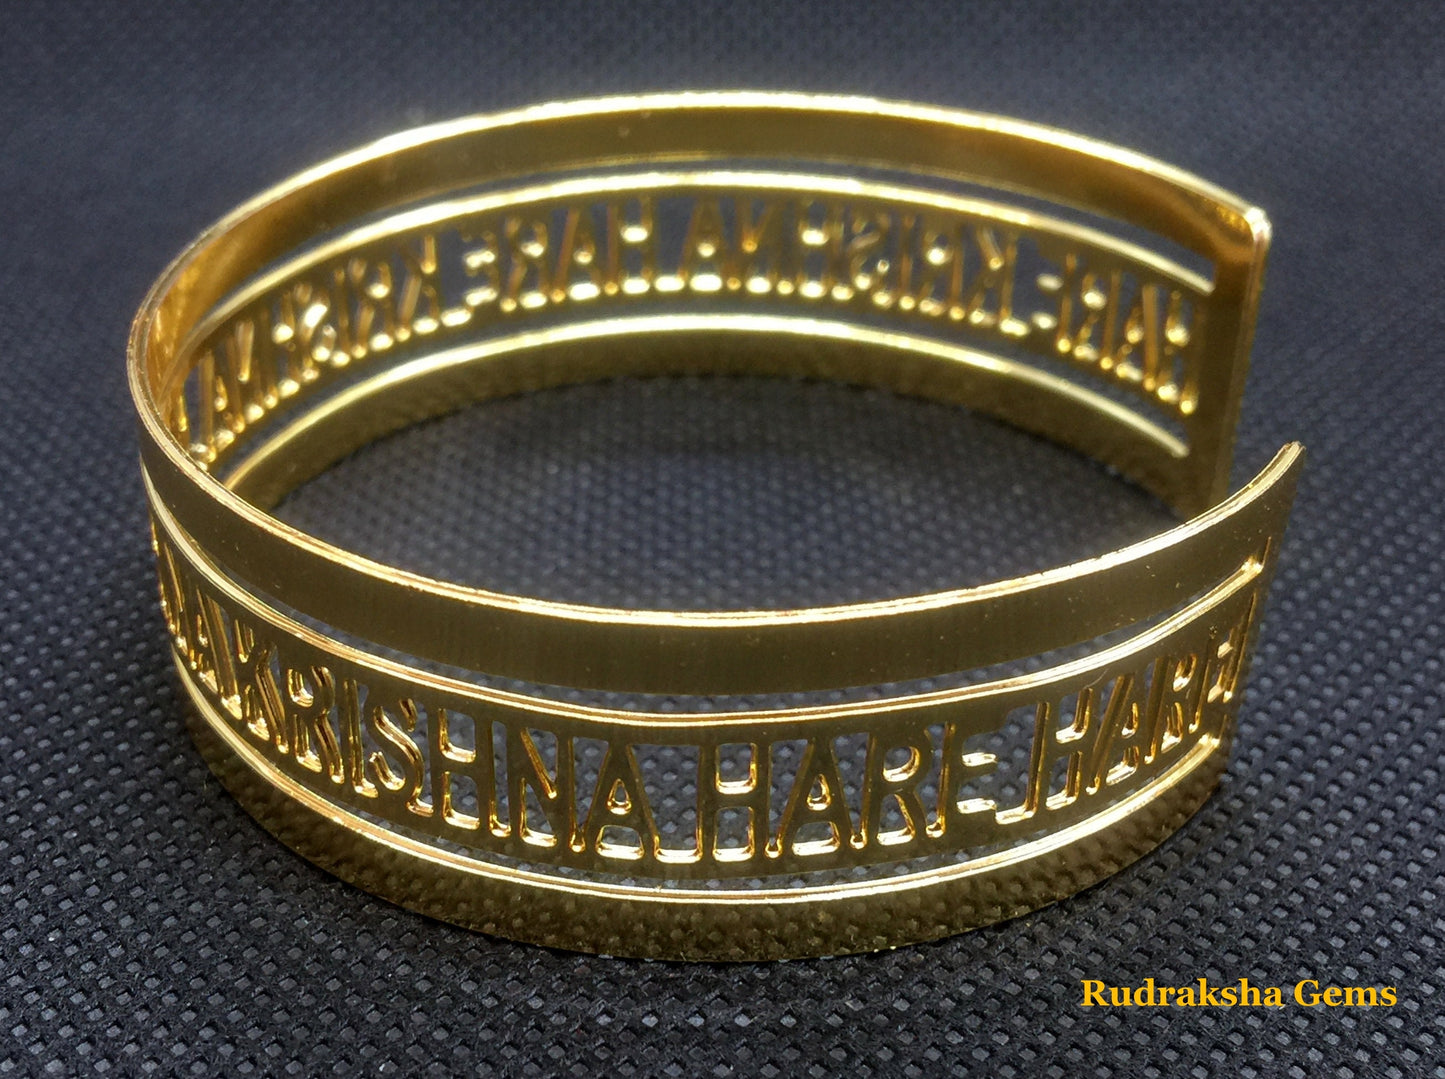 Hare Krishna Mantra Bracelet Wrist Band Metal Golden Kada Cuff - Yoga Meditation Bracelet - Krishna Cuff Artisan Bracelet - Gopala Wristband